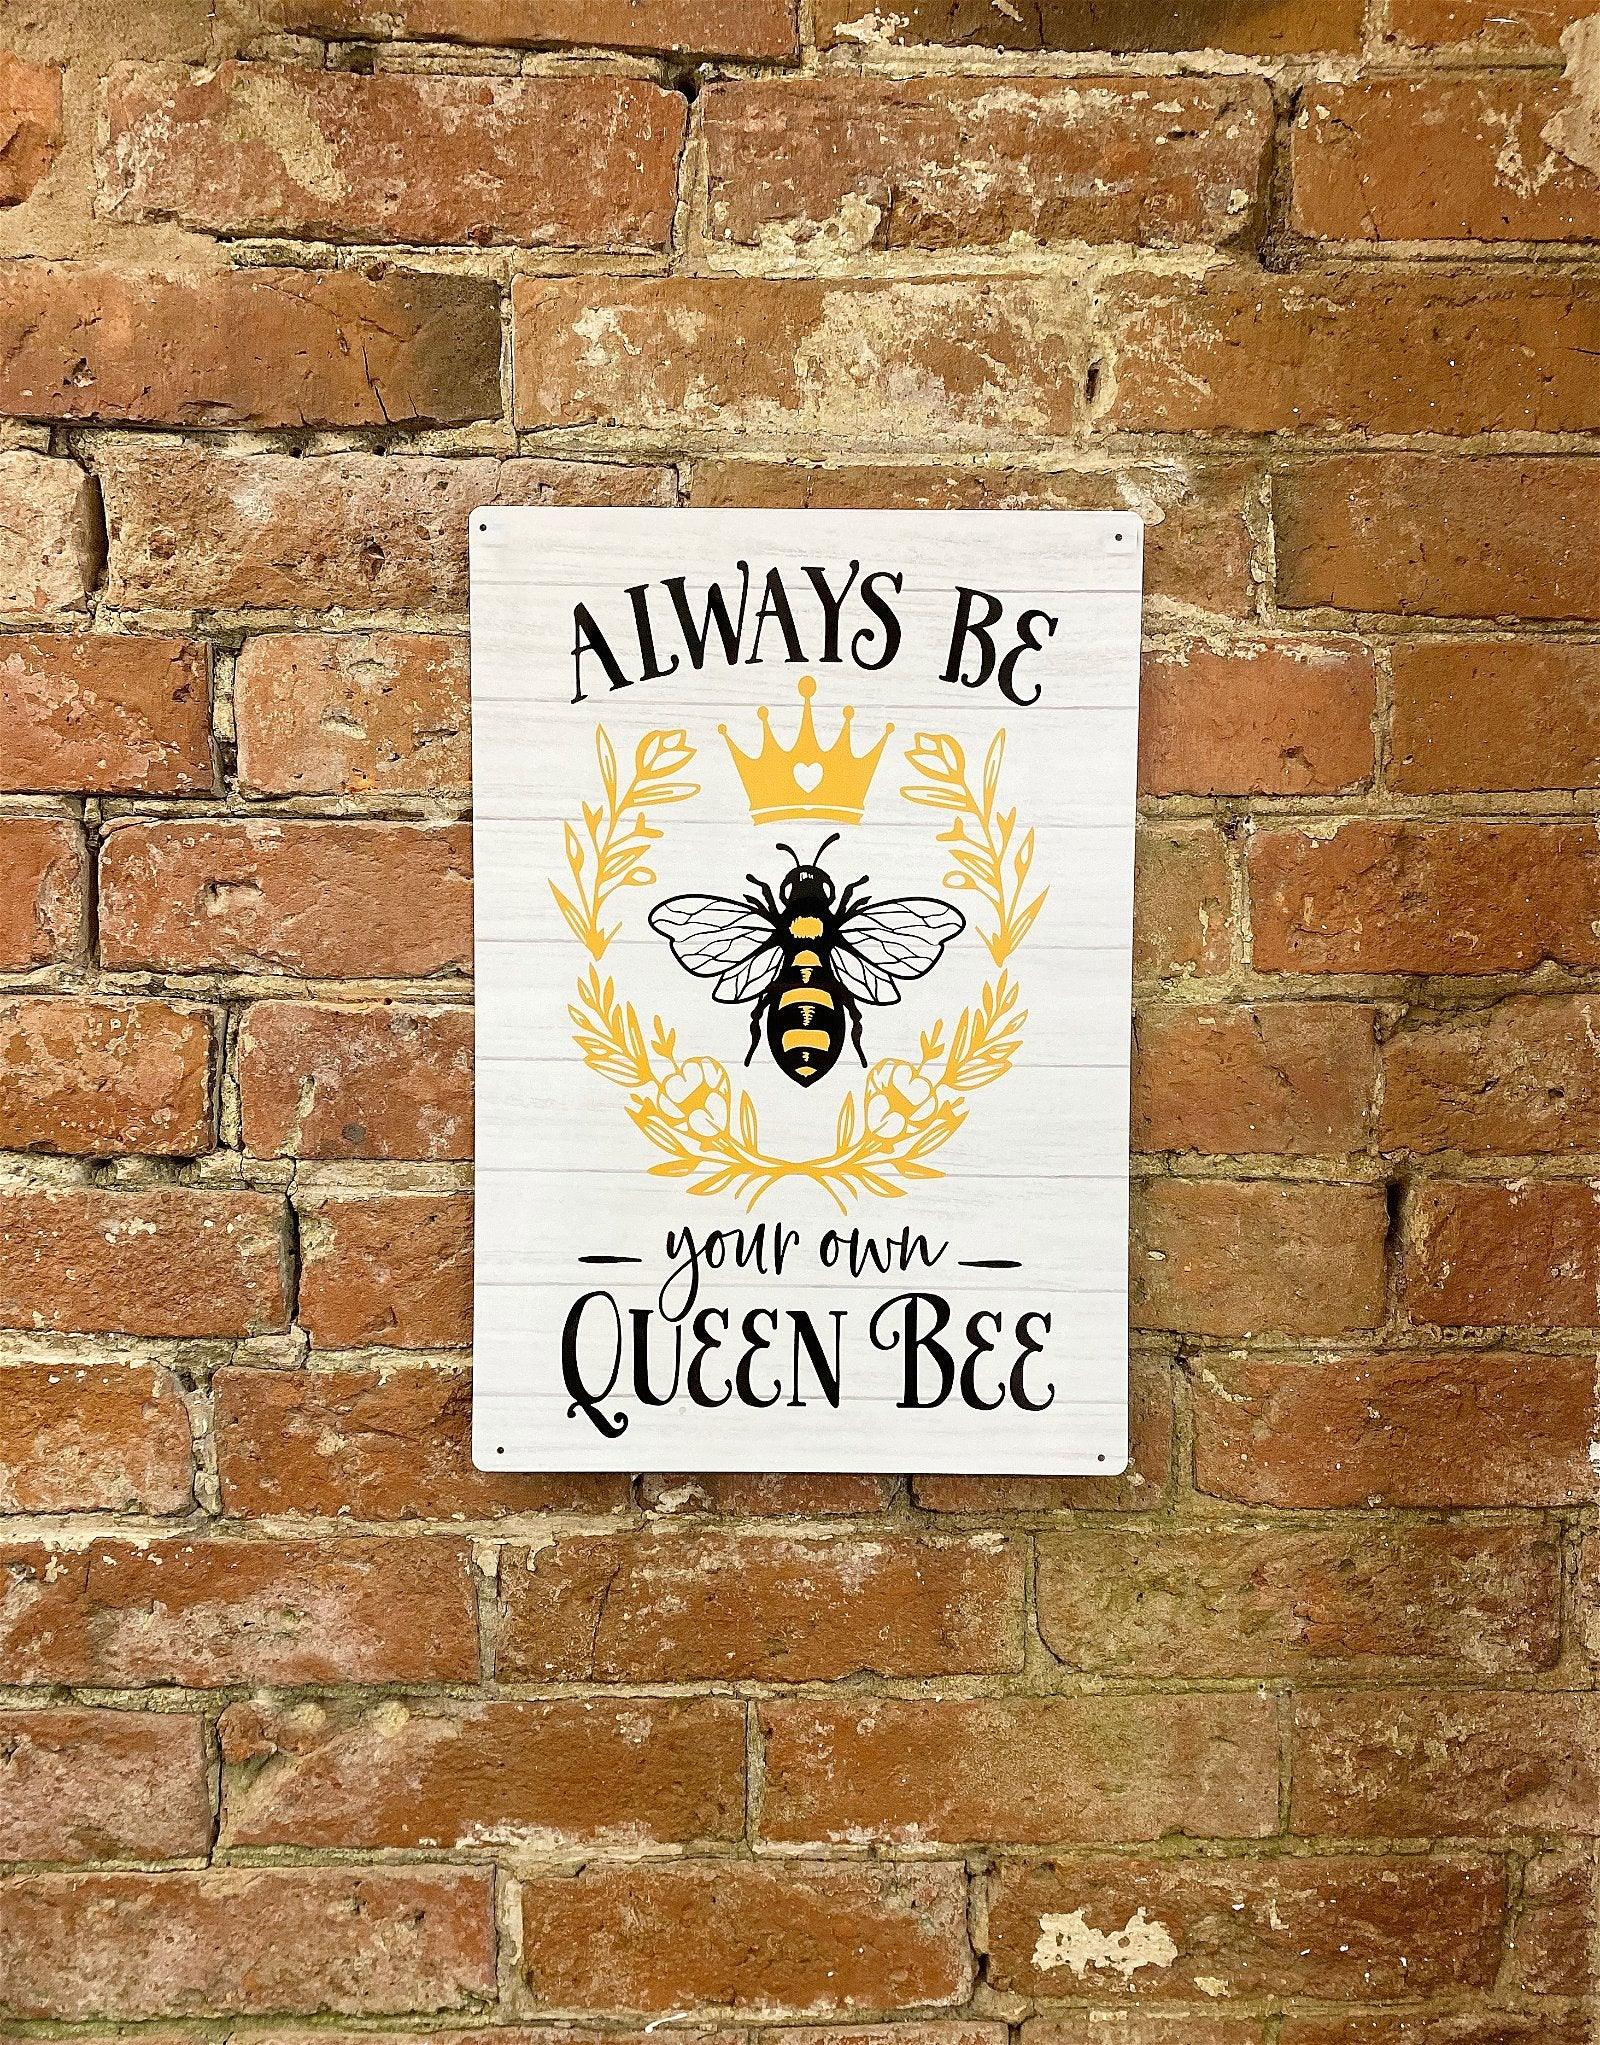 View Metal Sign Plaque Always Be Your Own Queen Bee information